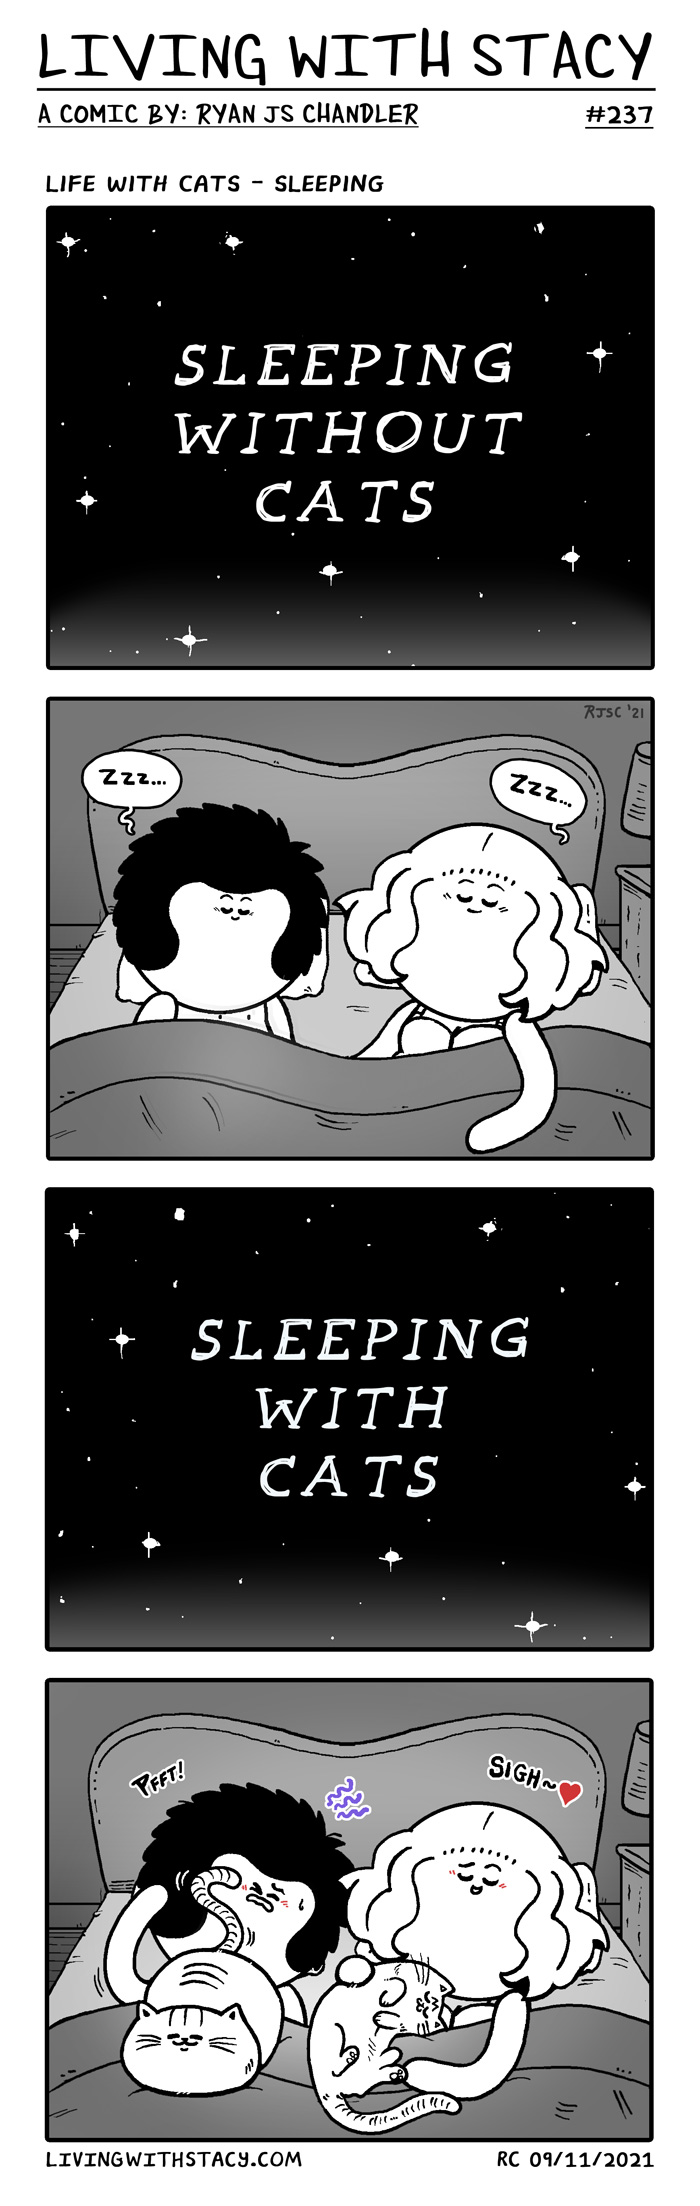 Life With Cats - Sleeping- LWS COMICS #237